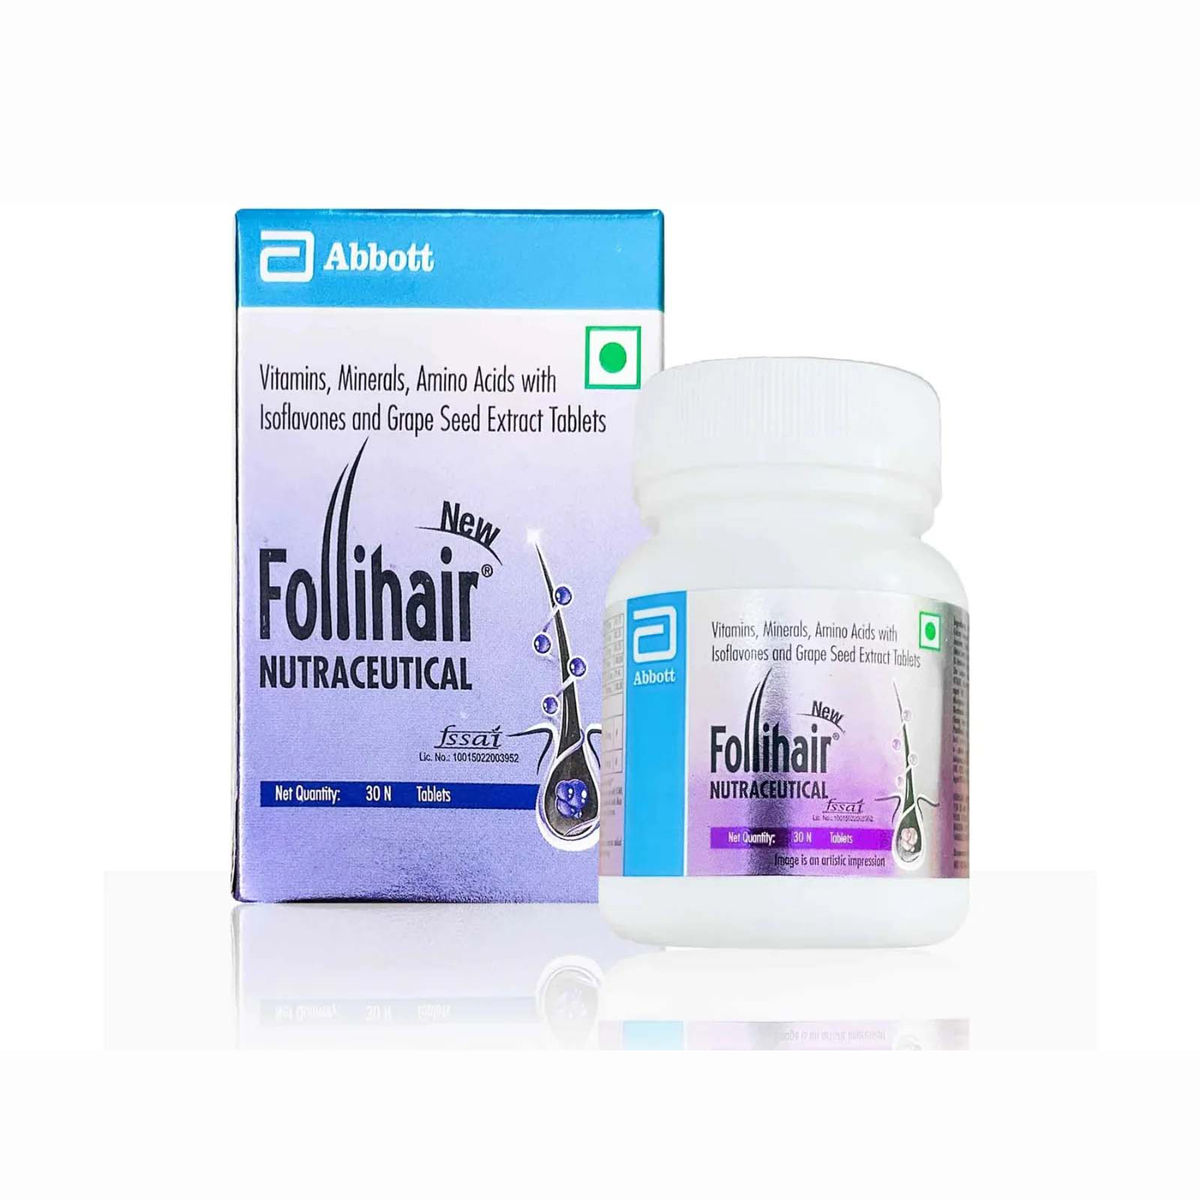 Buy Follihair New Nutraceutical, 30 Tablets Online